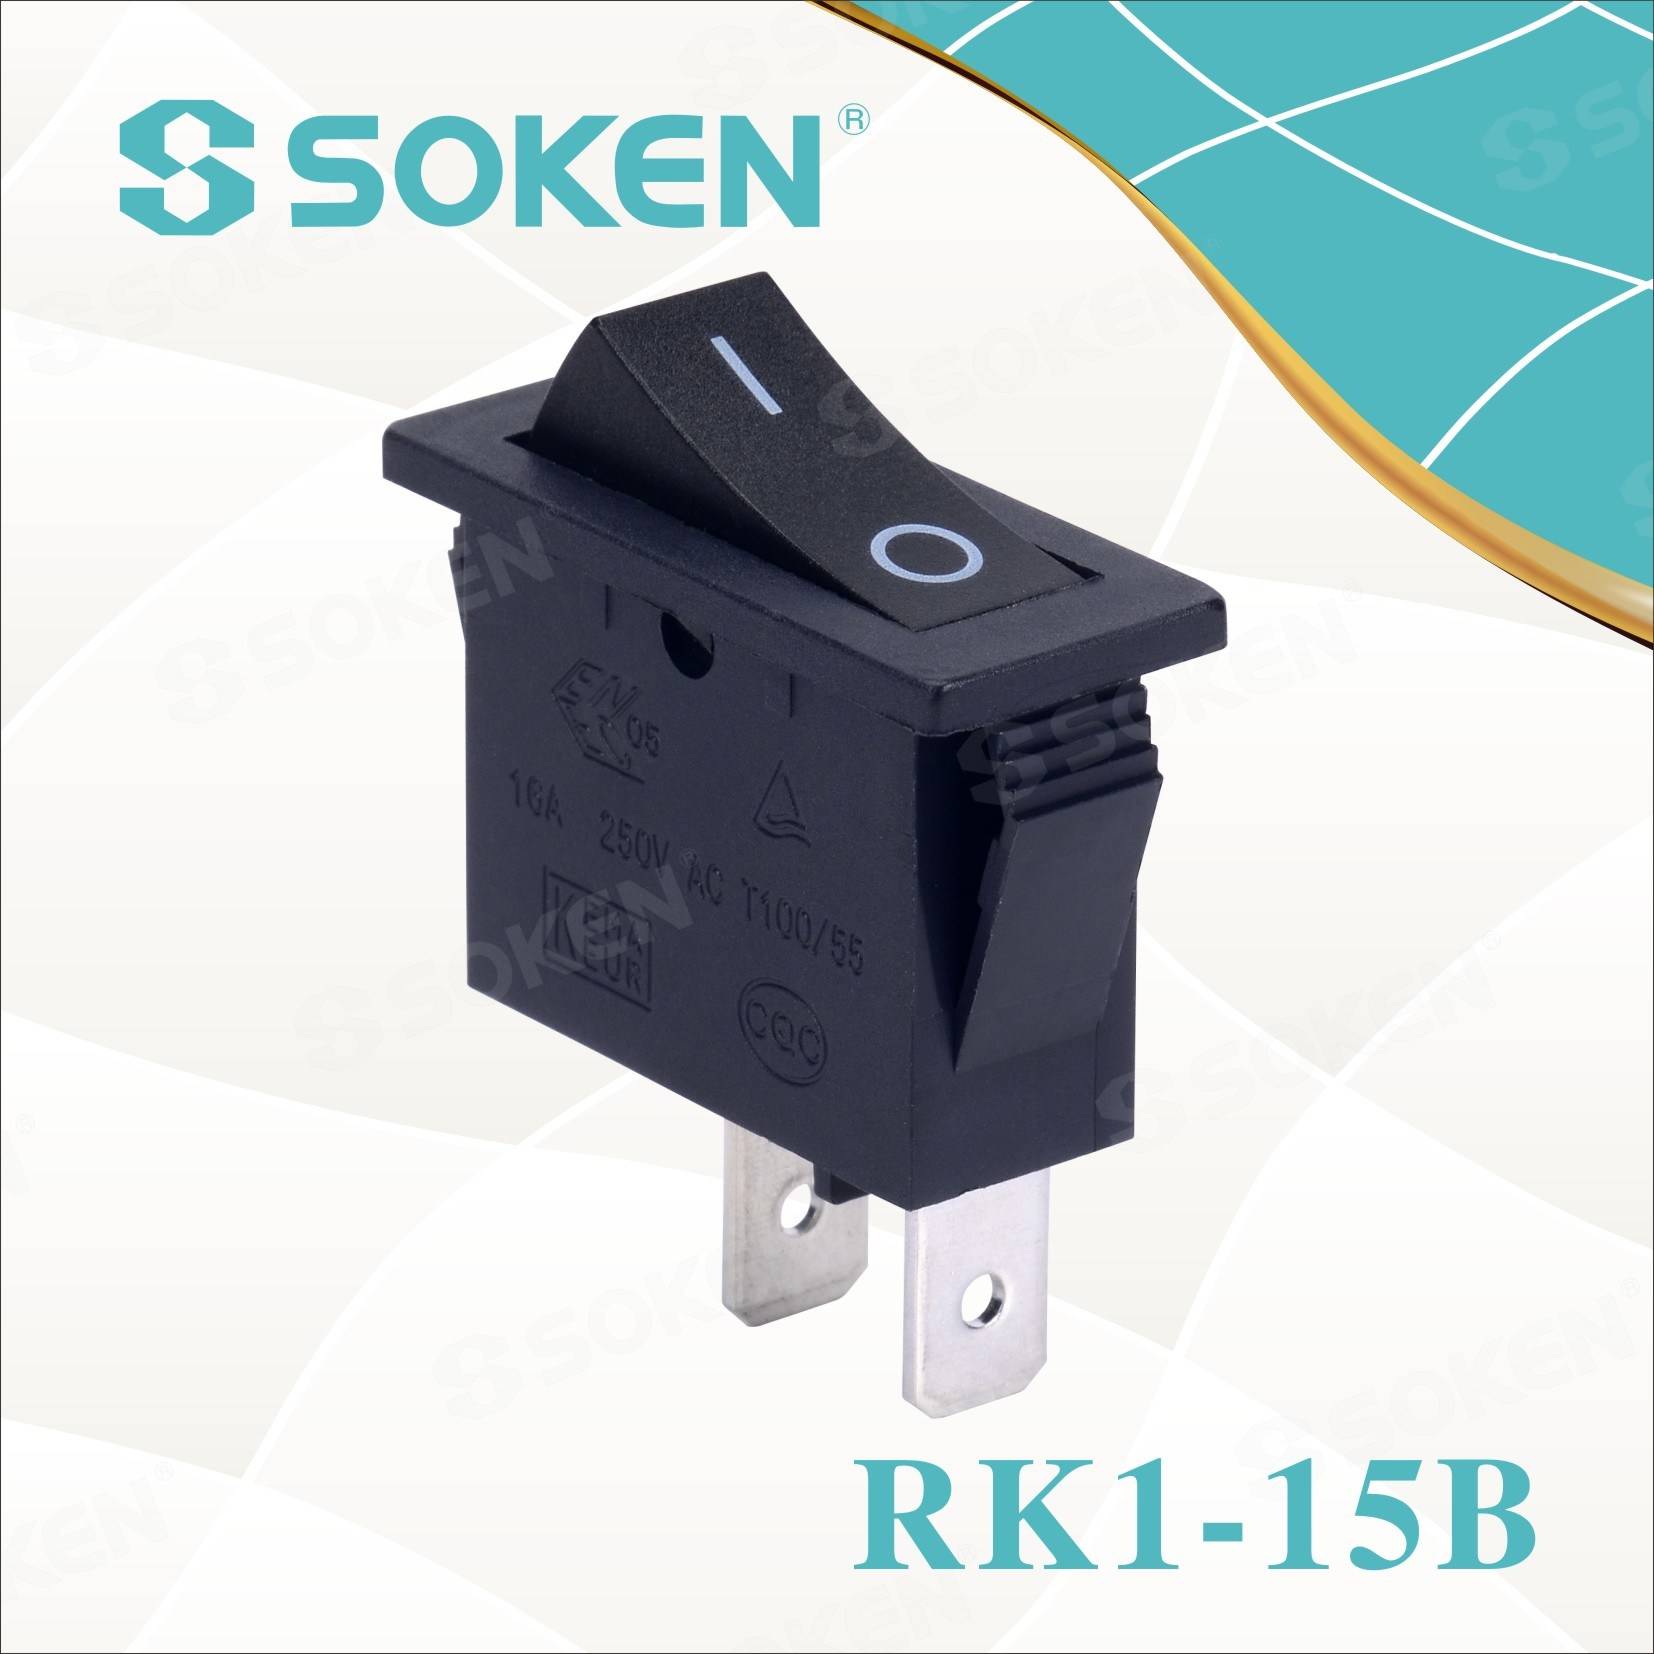 Best-Selling Push Key Button Switch -
 Soken Rk1-15b 1X1 B/B on off Rocker Switch – Master Soken Electrical